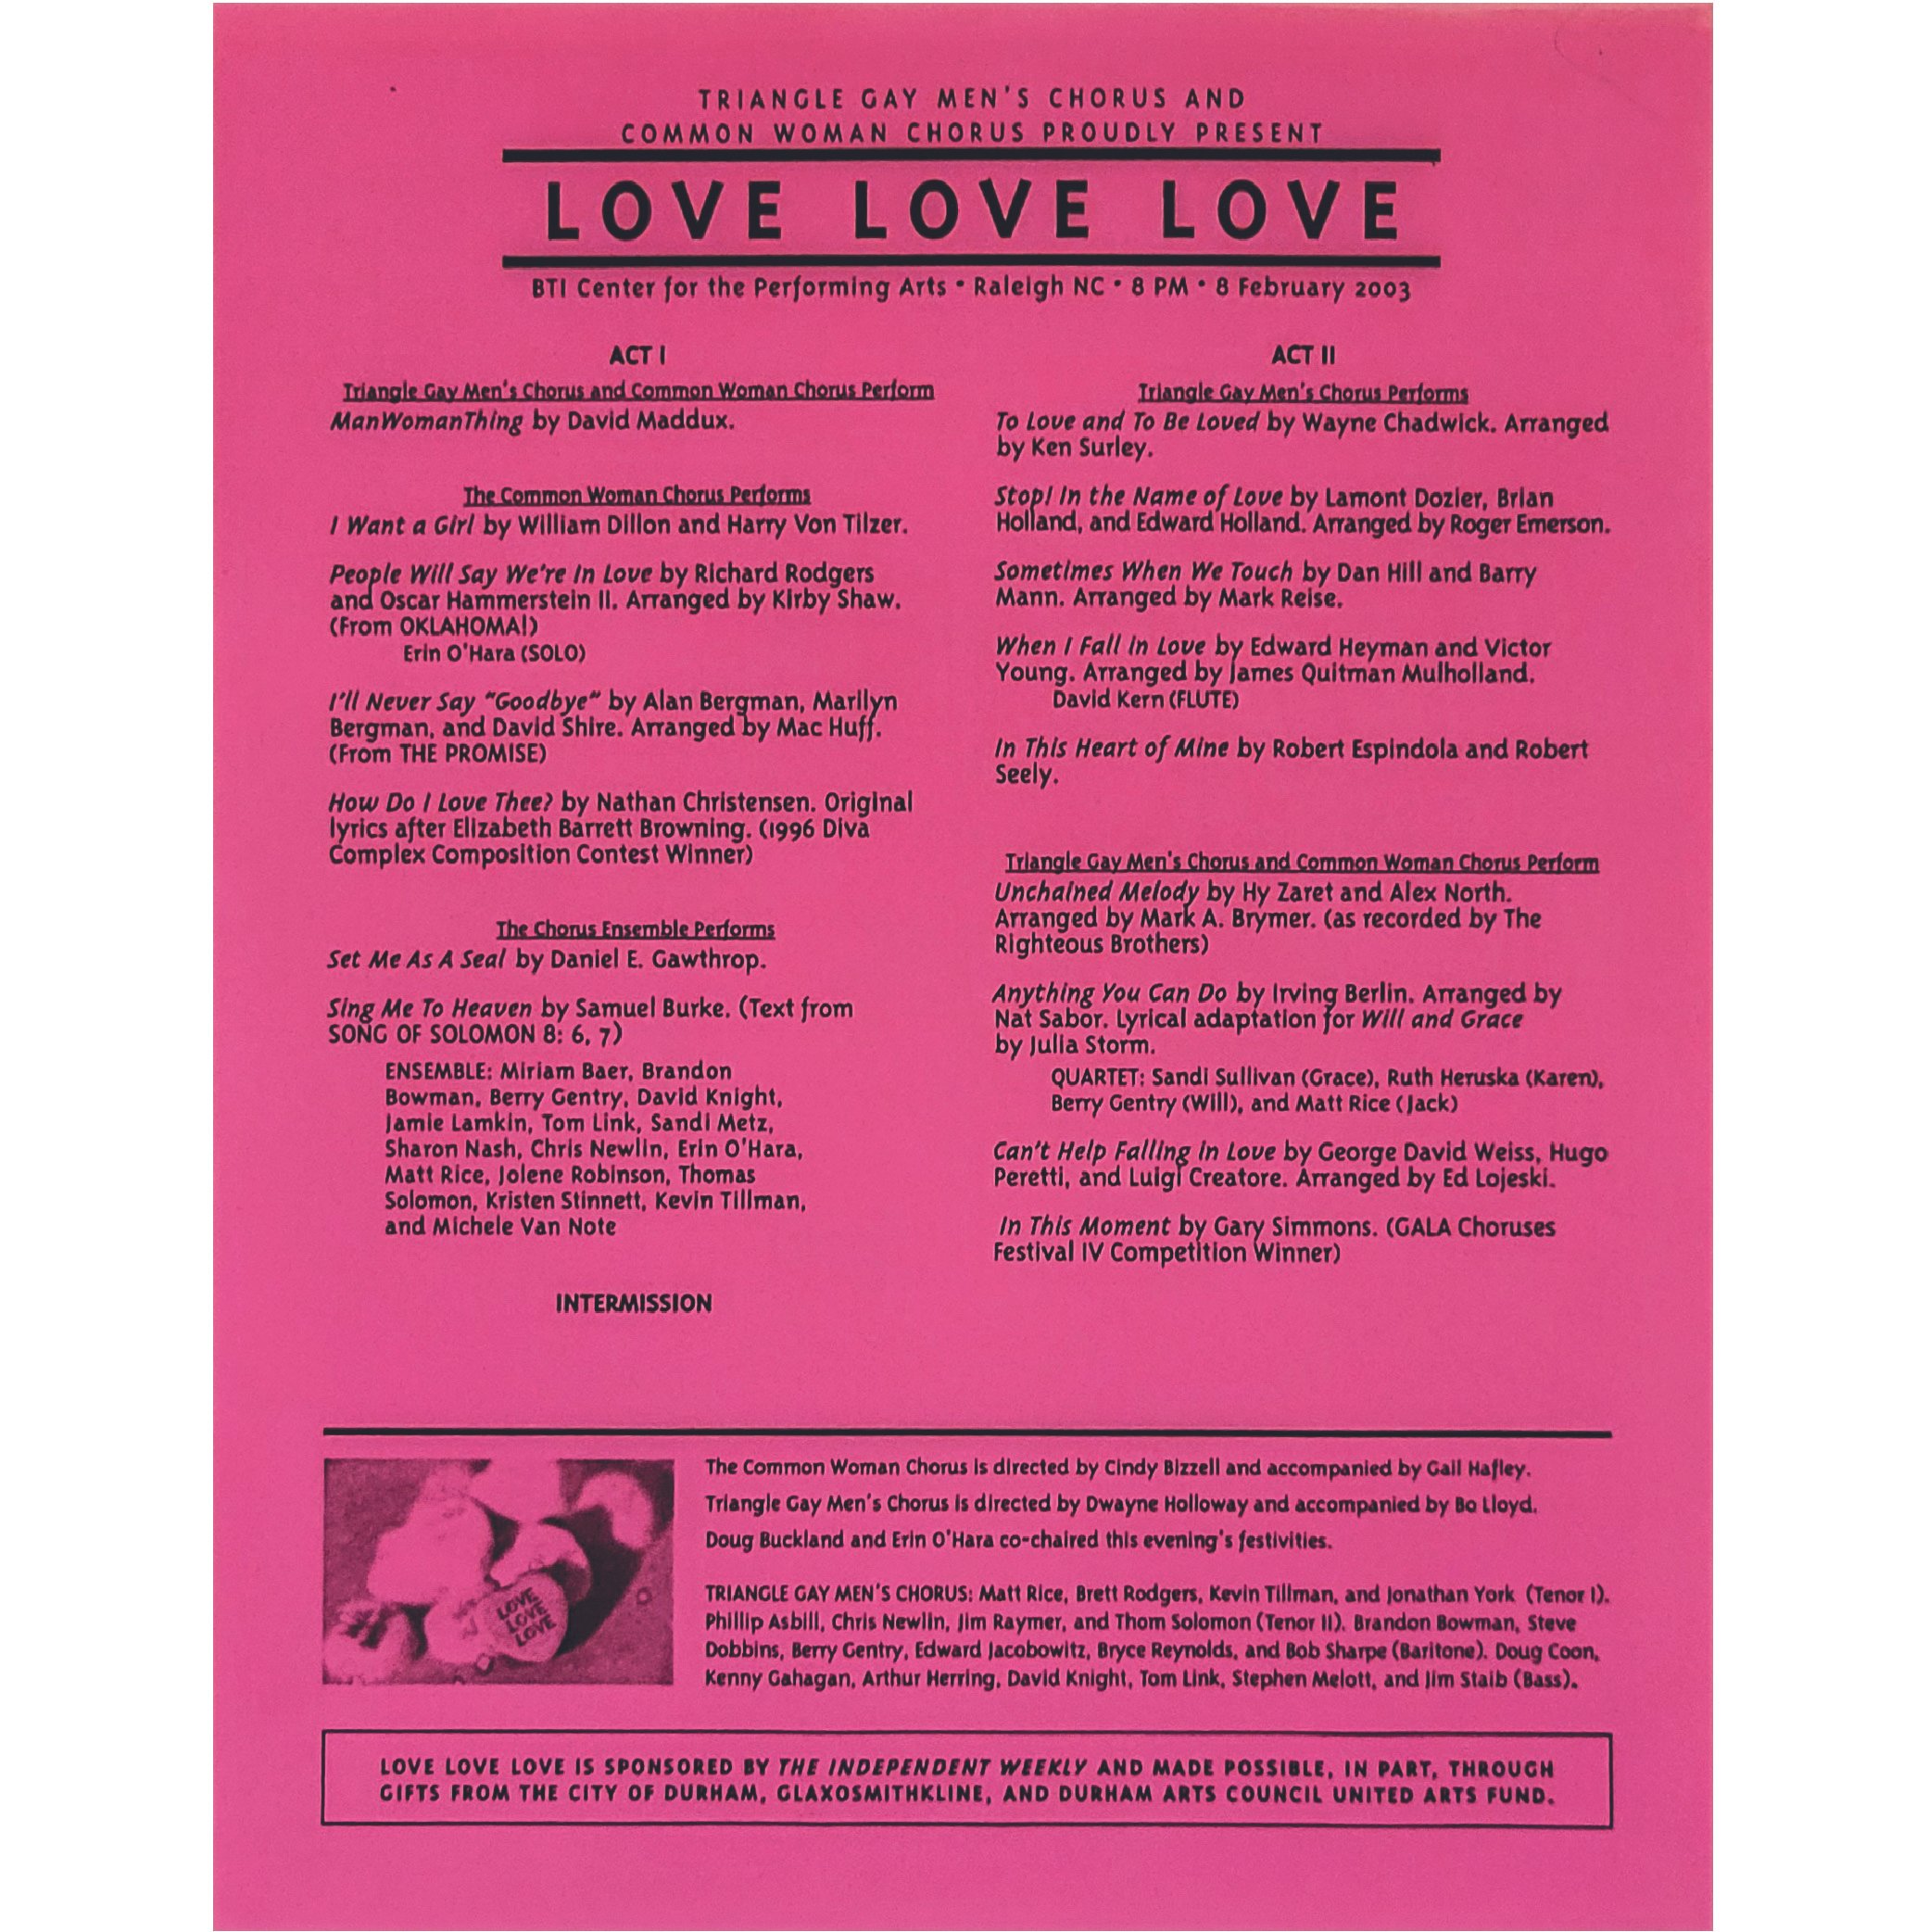 Love Love Love with TGMC 2003